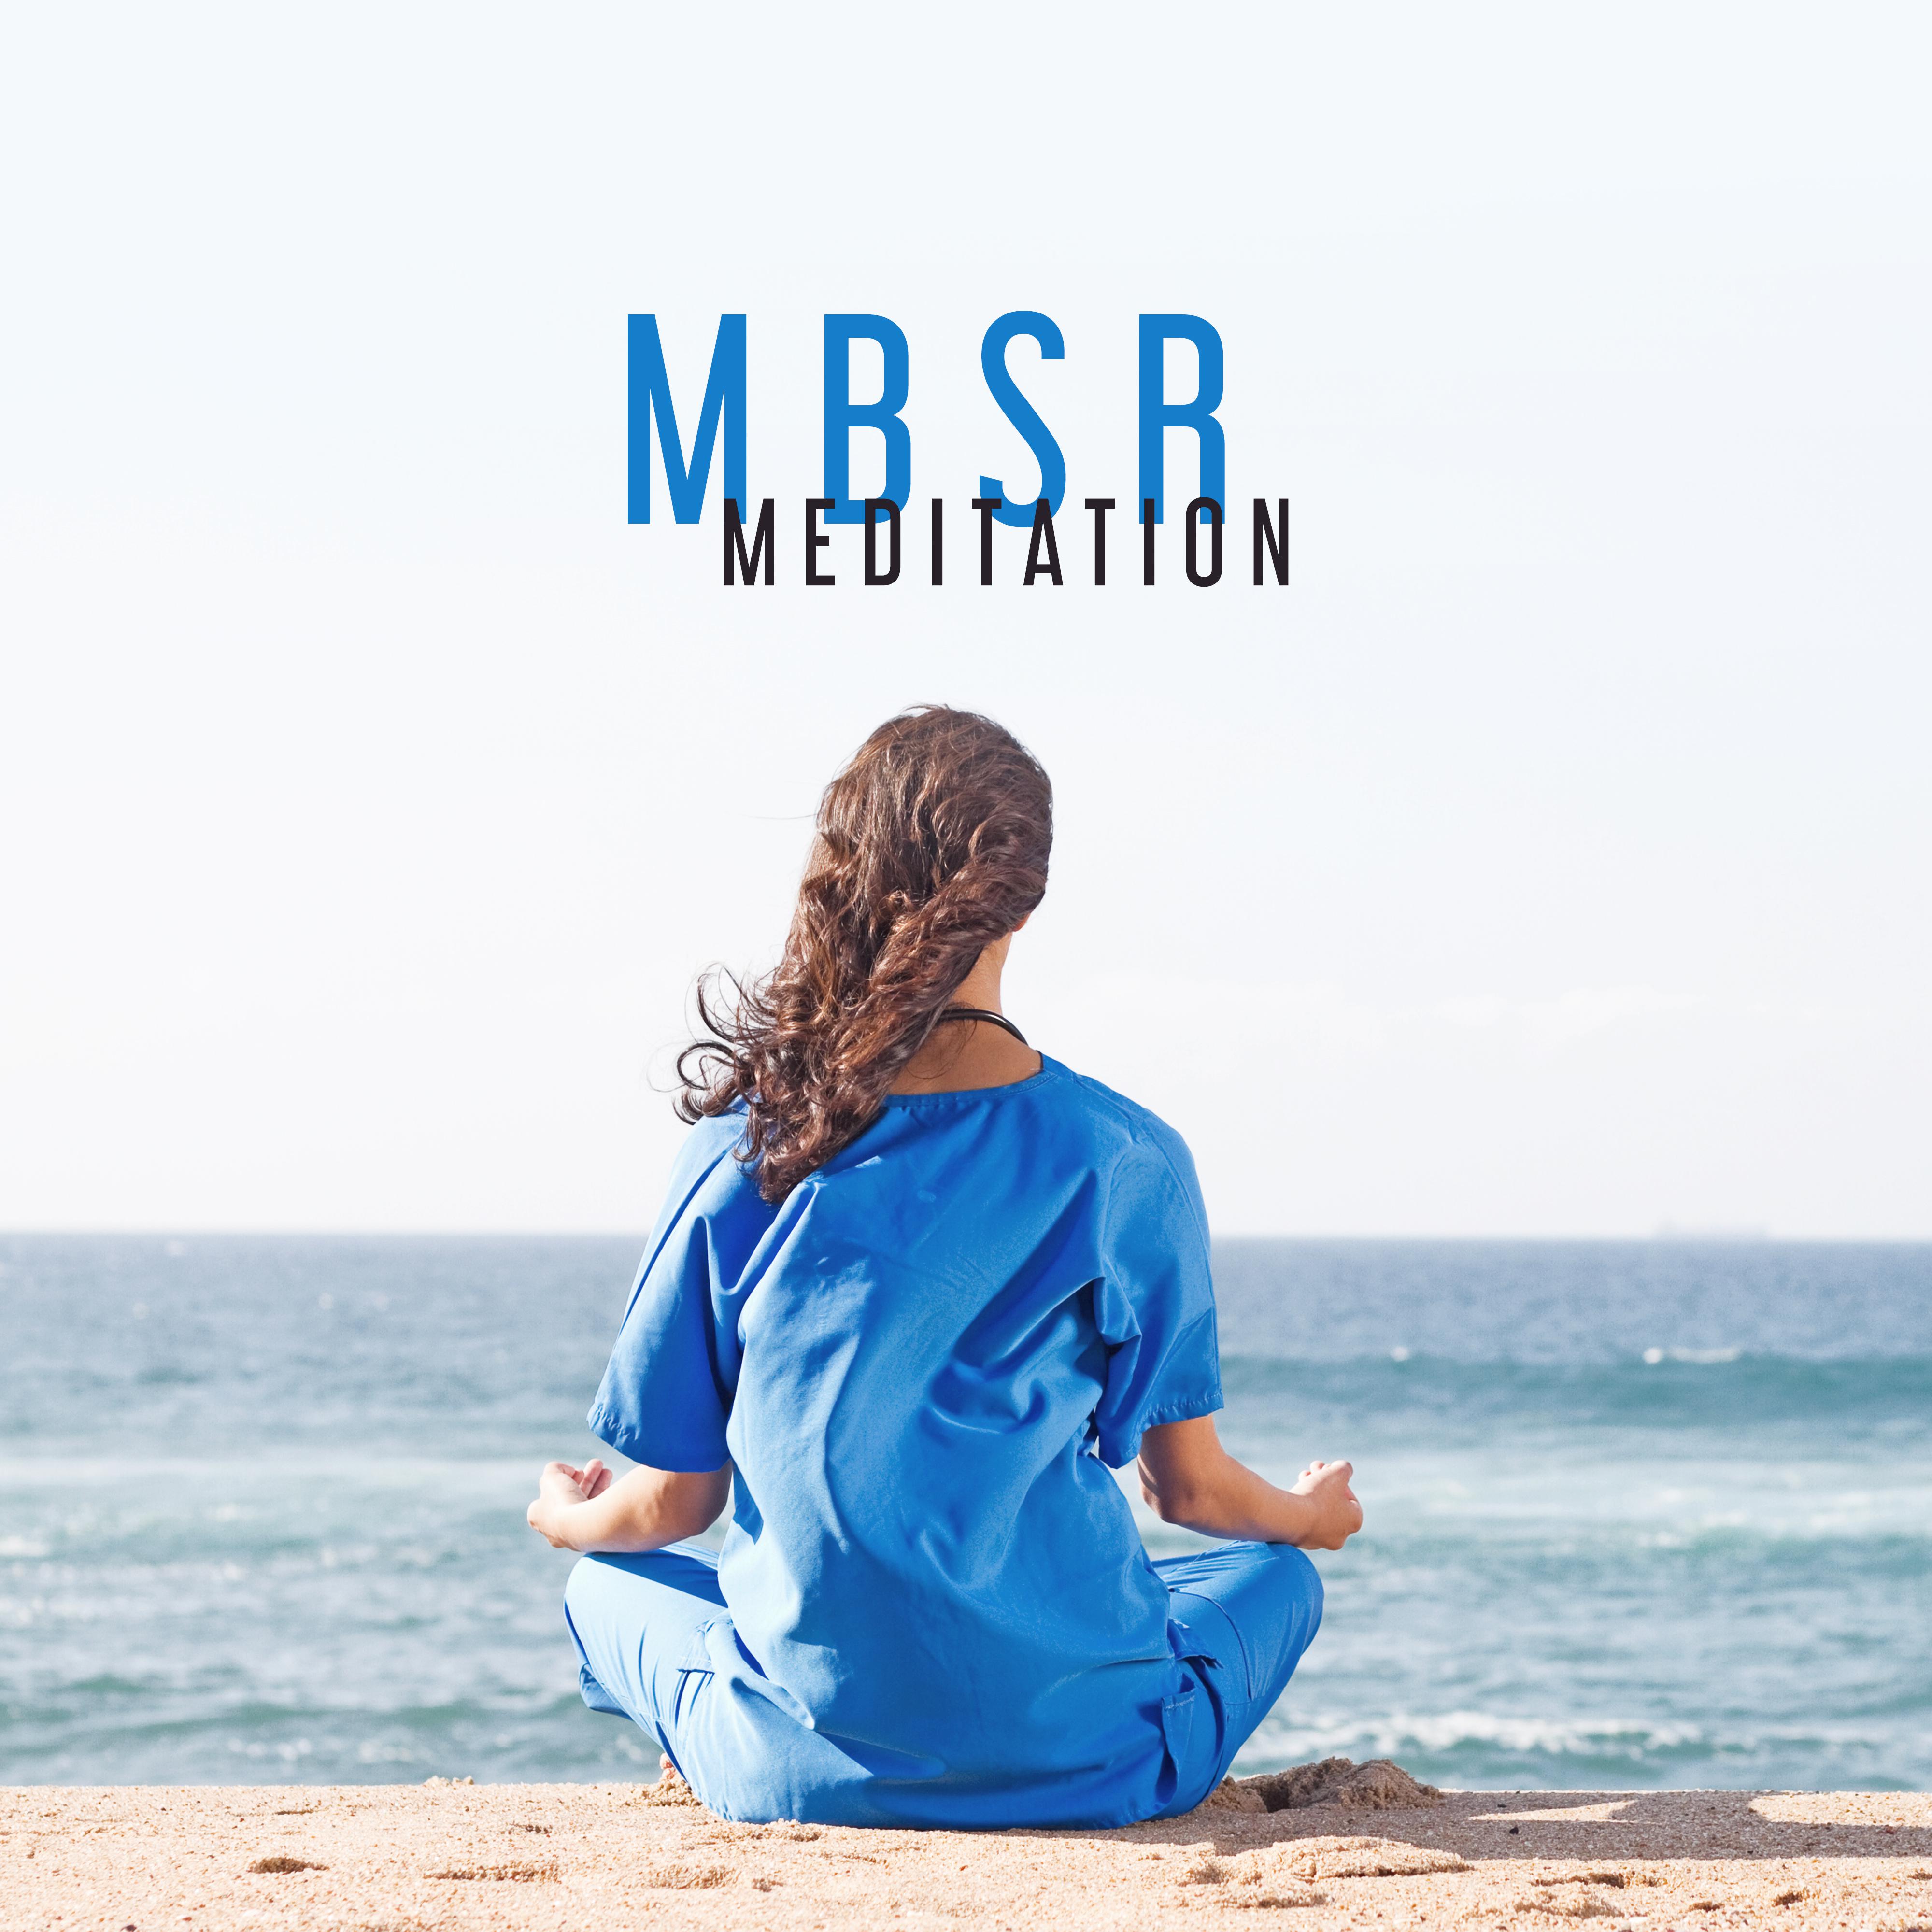 MBSR Meditation - Reduction of Stress through Mindfulness